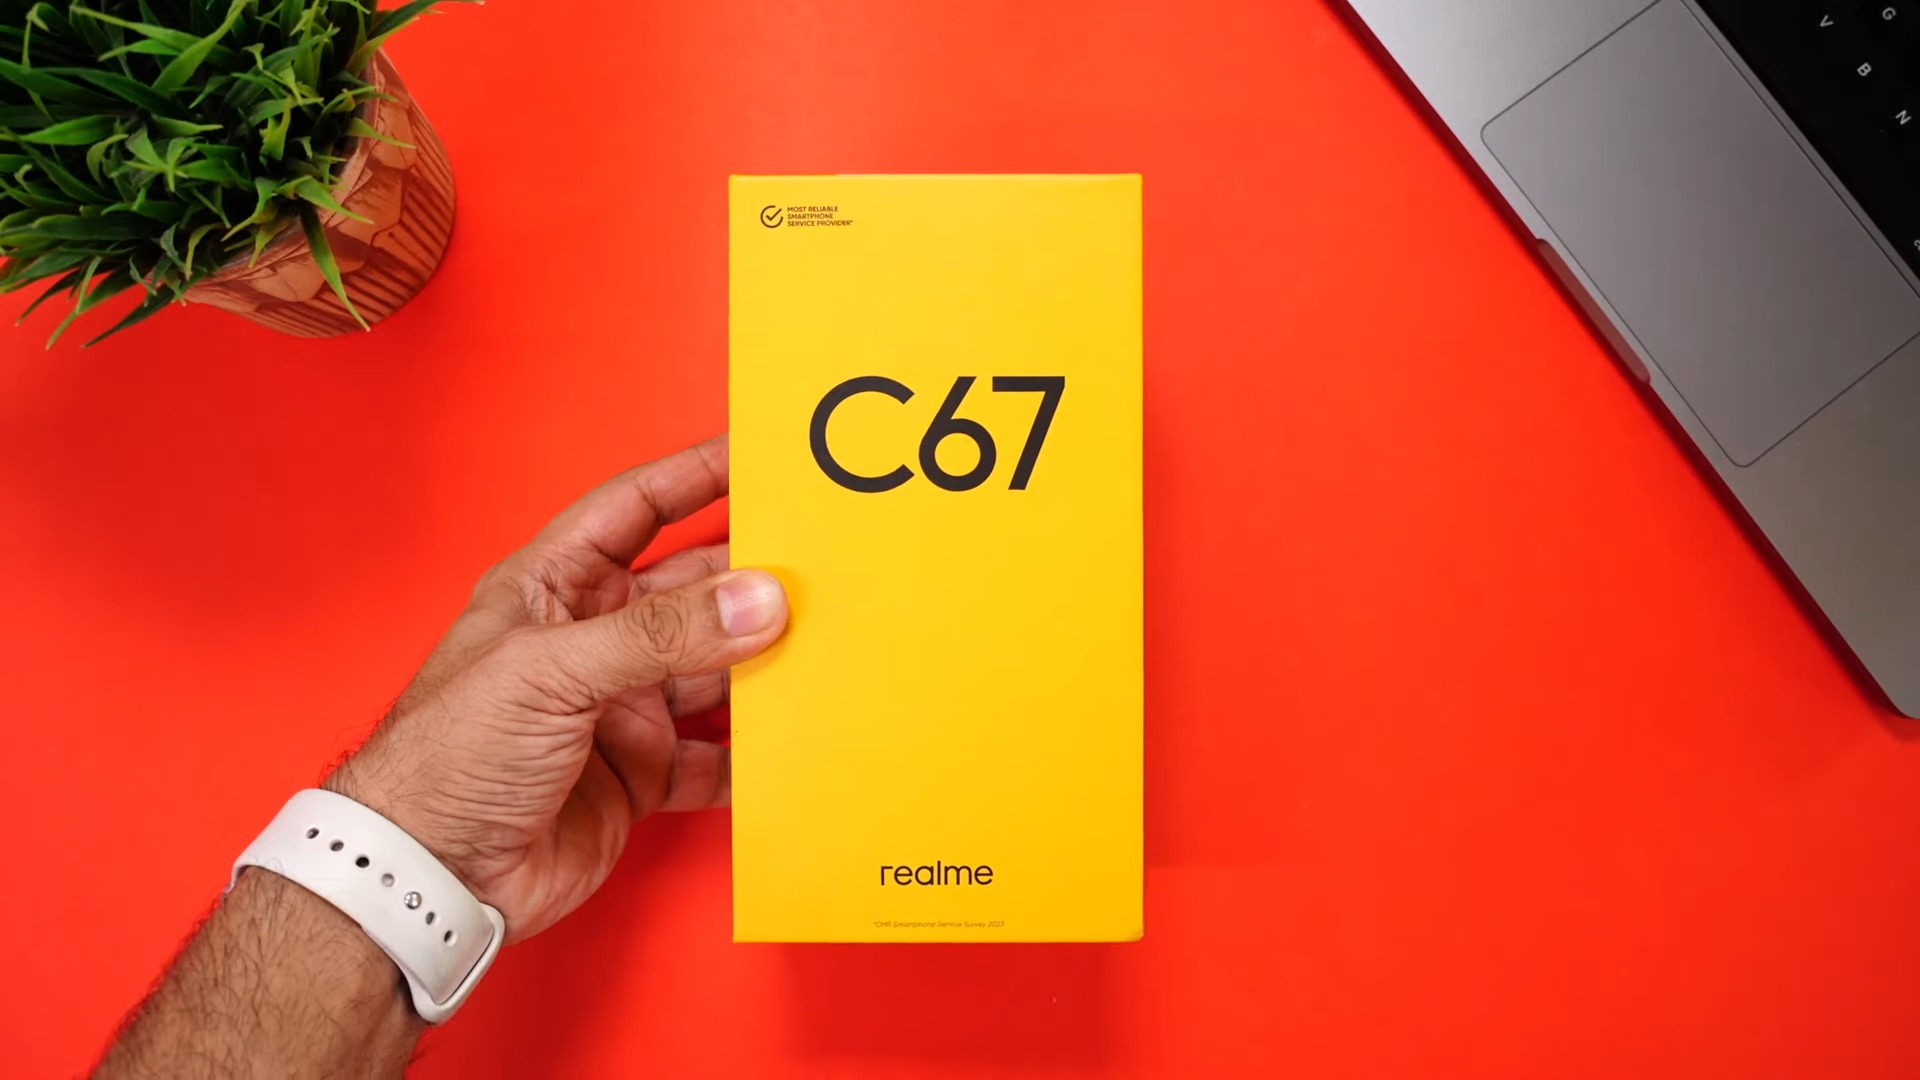 Realme C67 5G Review - Dkanto